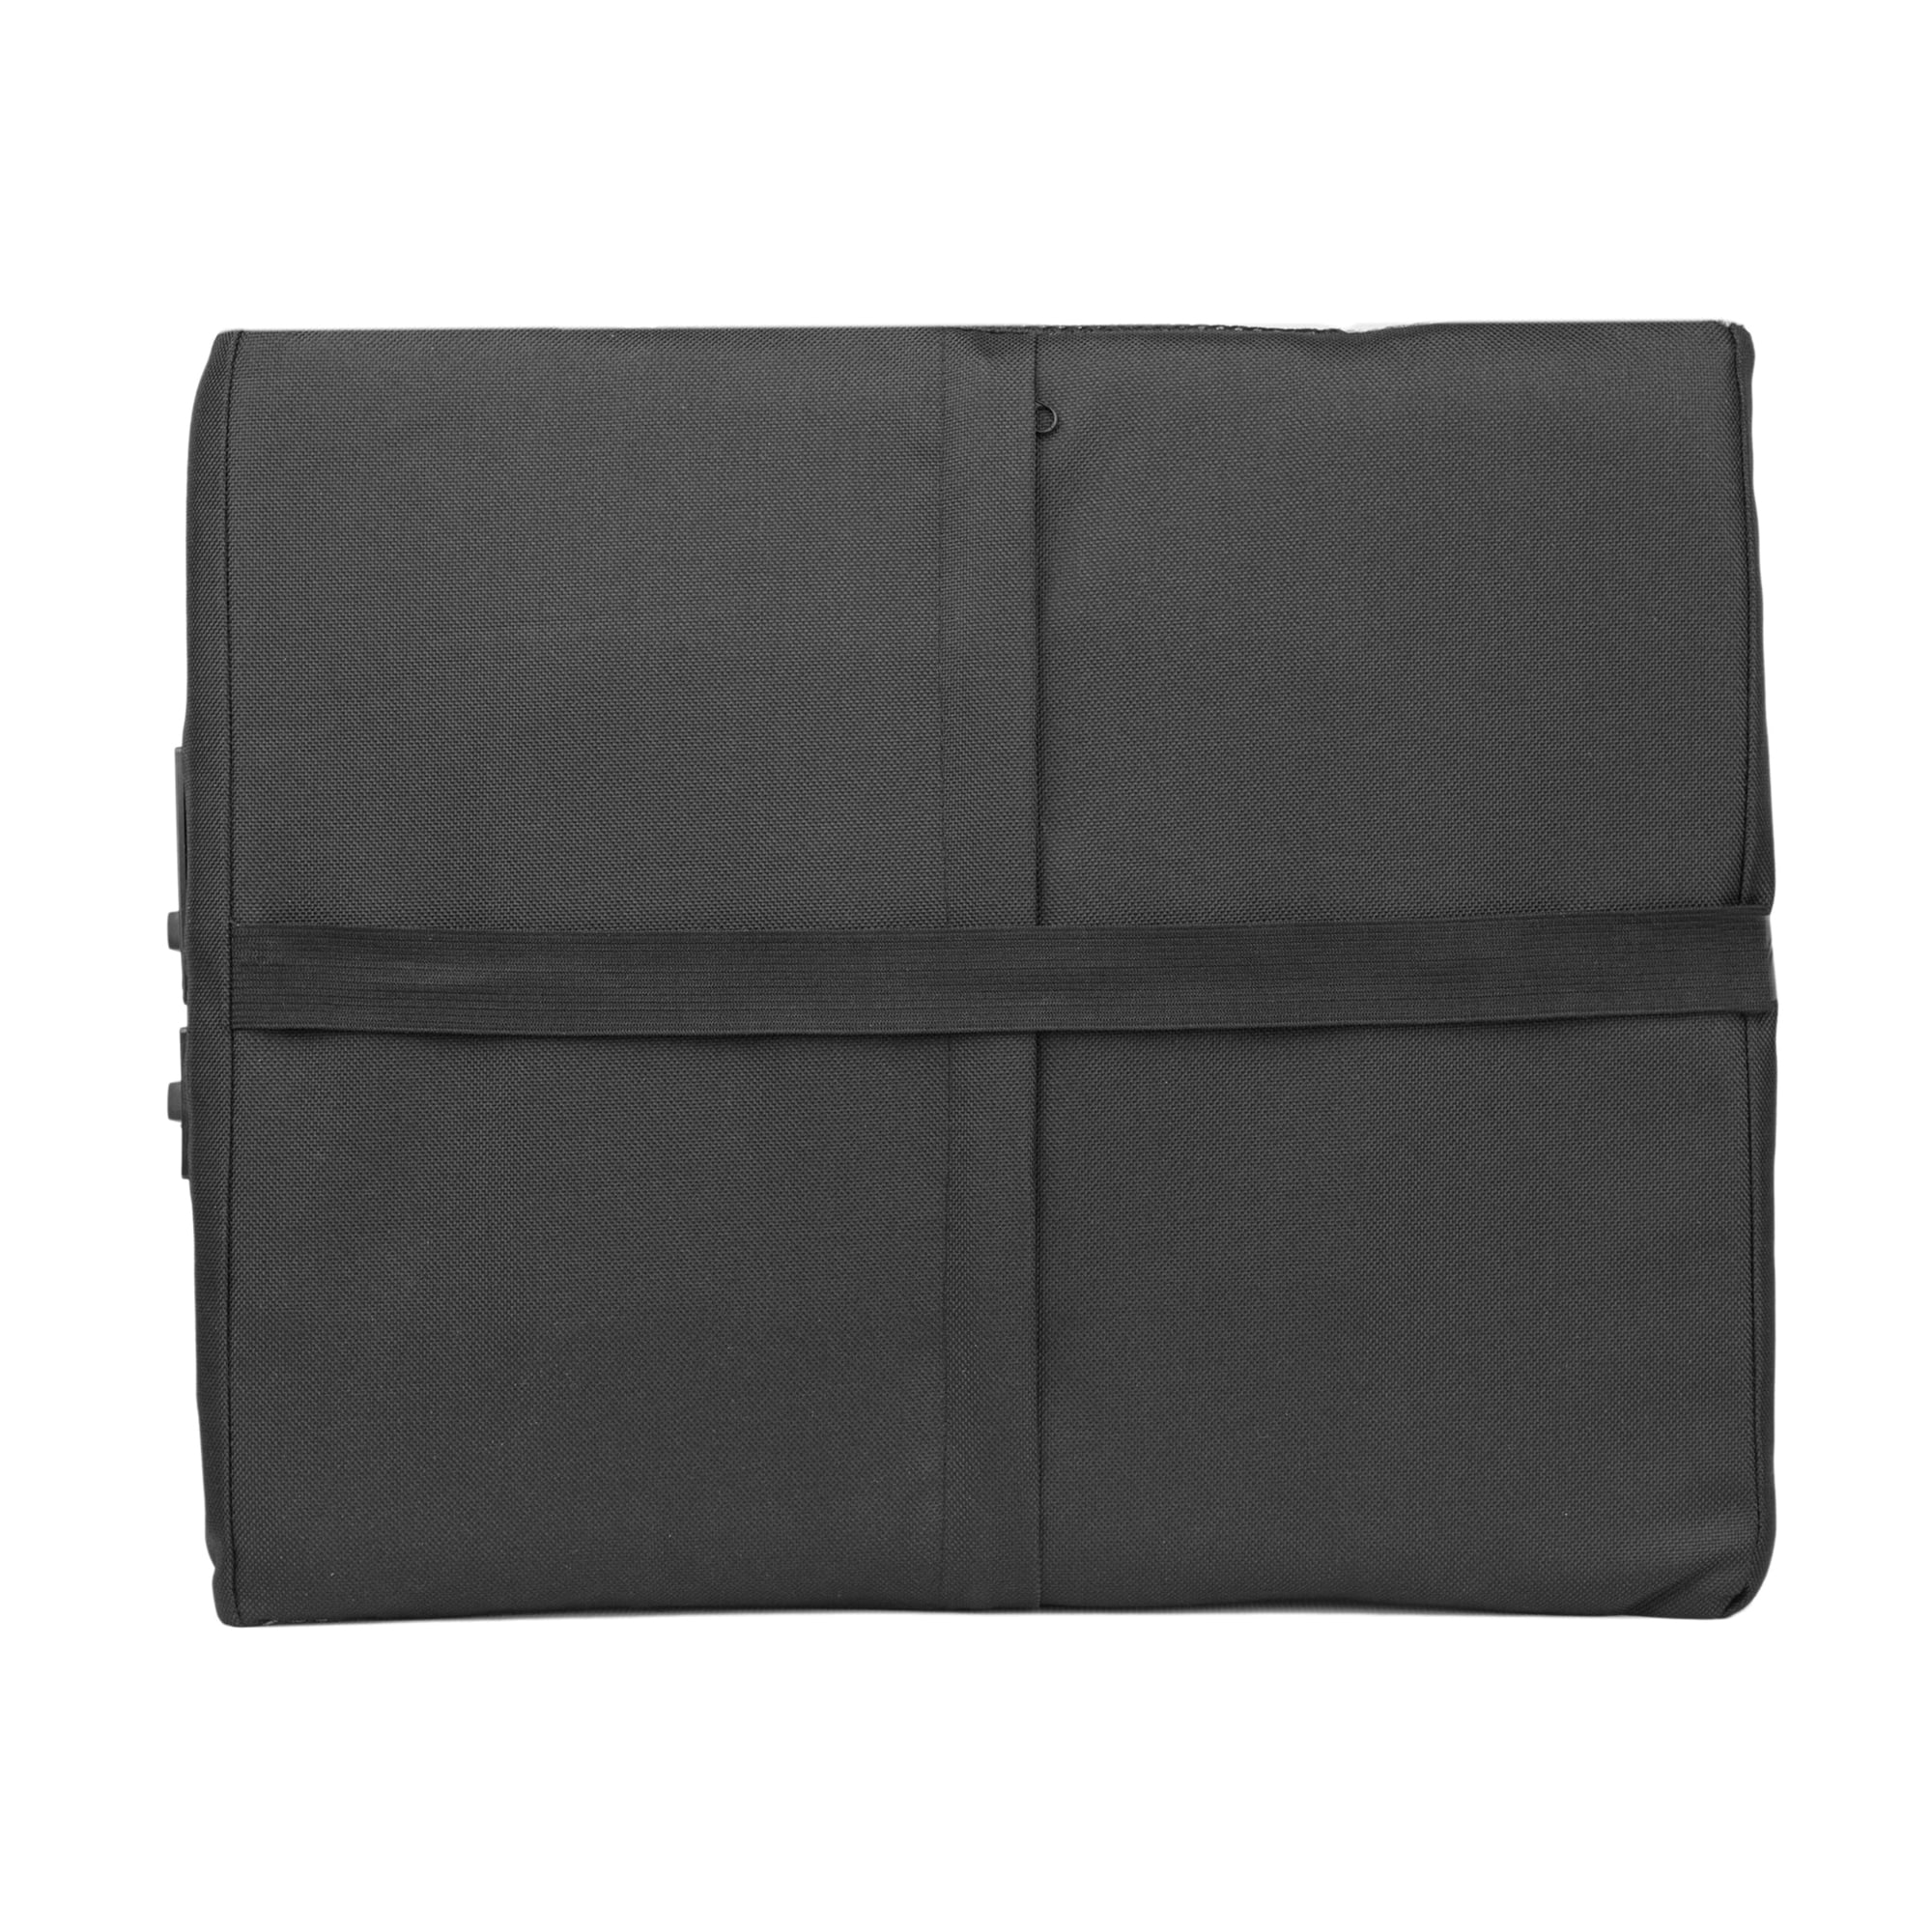 HealthMate Black Polyester Car Seat Cushion - 12-Volt Heated